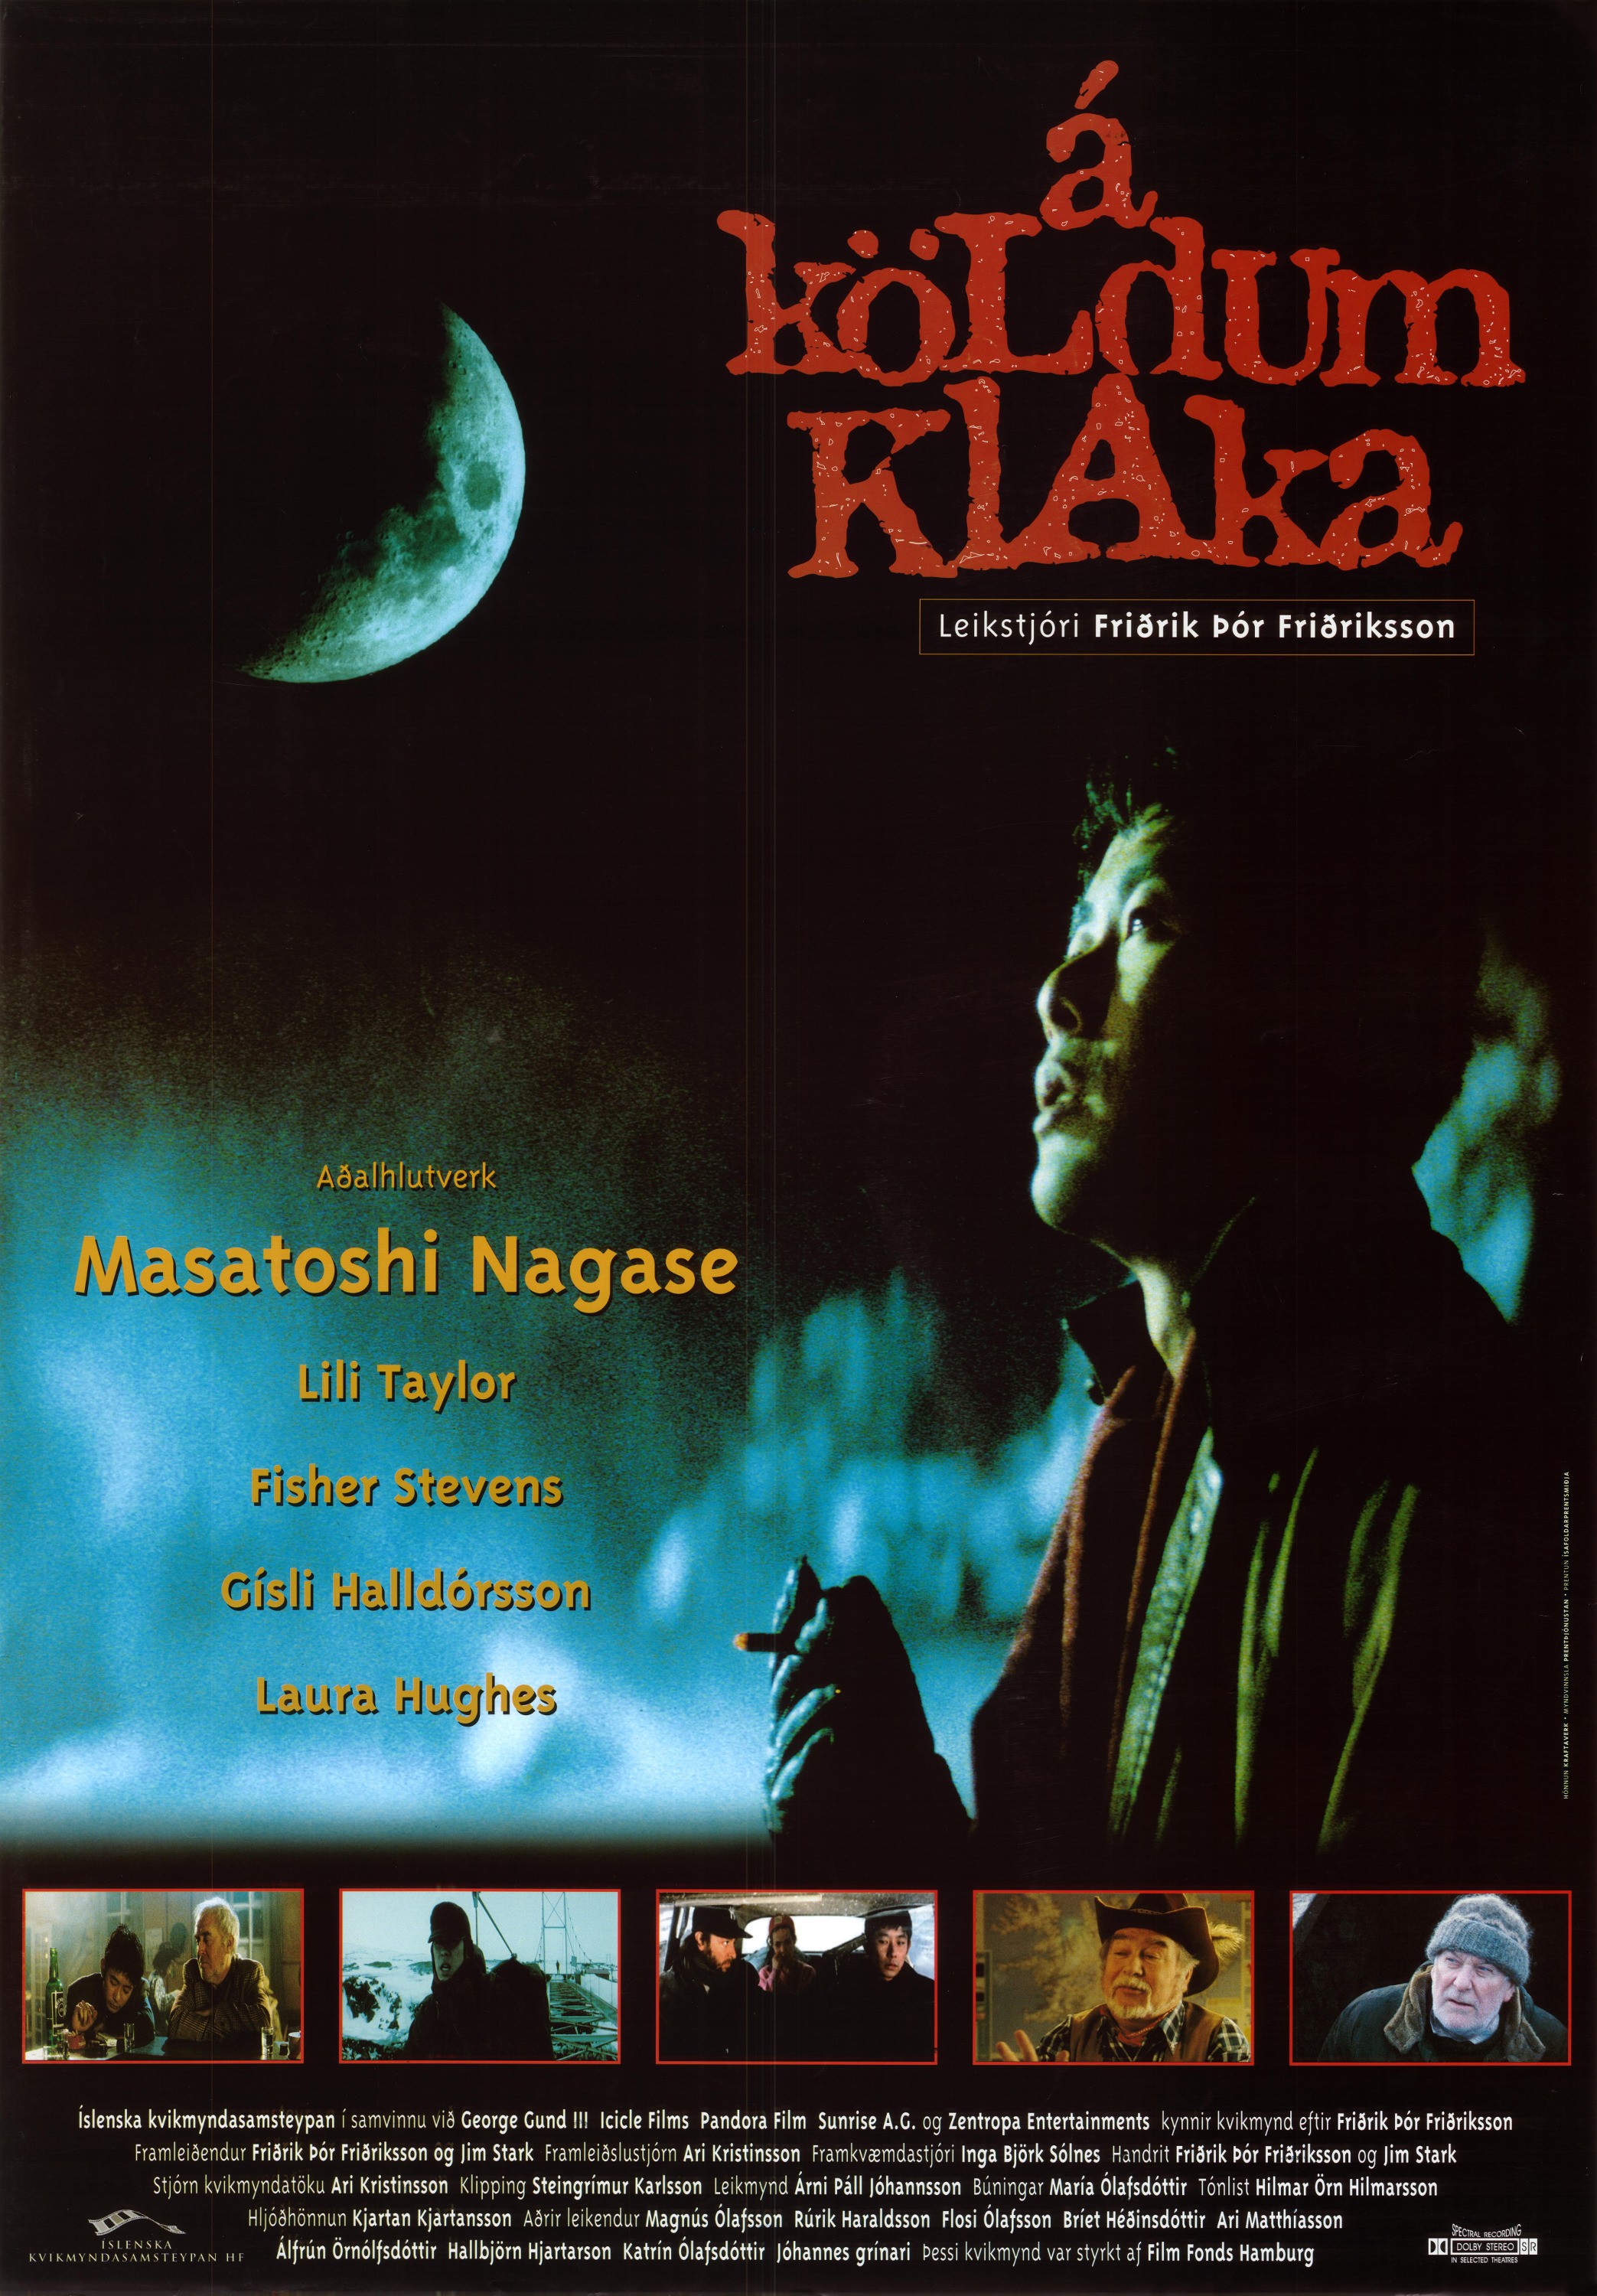 Mega Sized Movie Poster Image for Á köldum klaka 